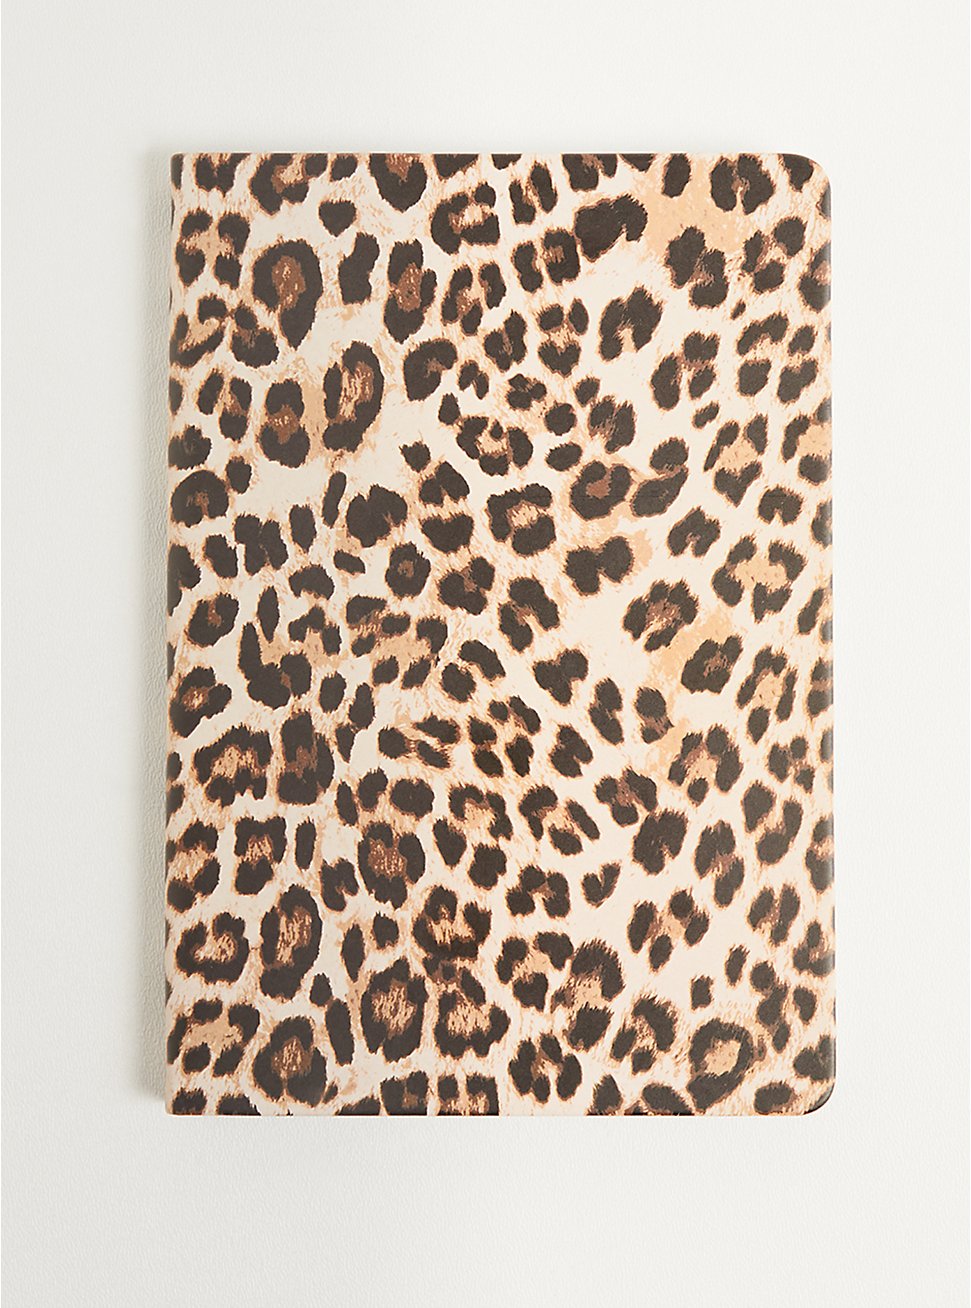 Plus Size 6x8 Notebook - Fifties Leopard , , hi-res